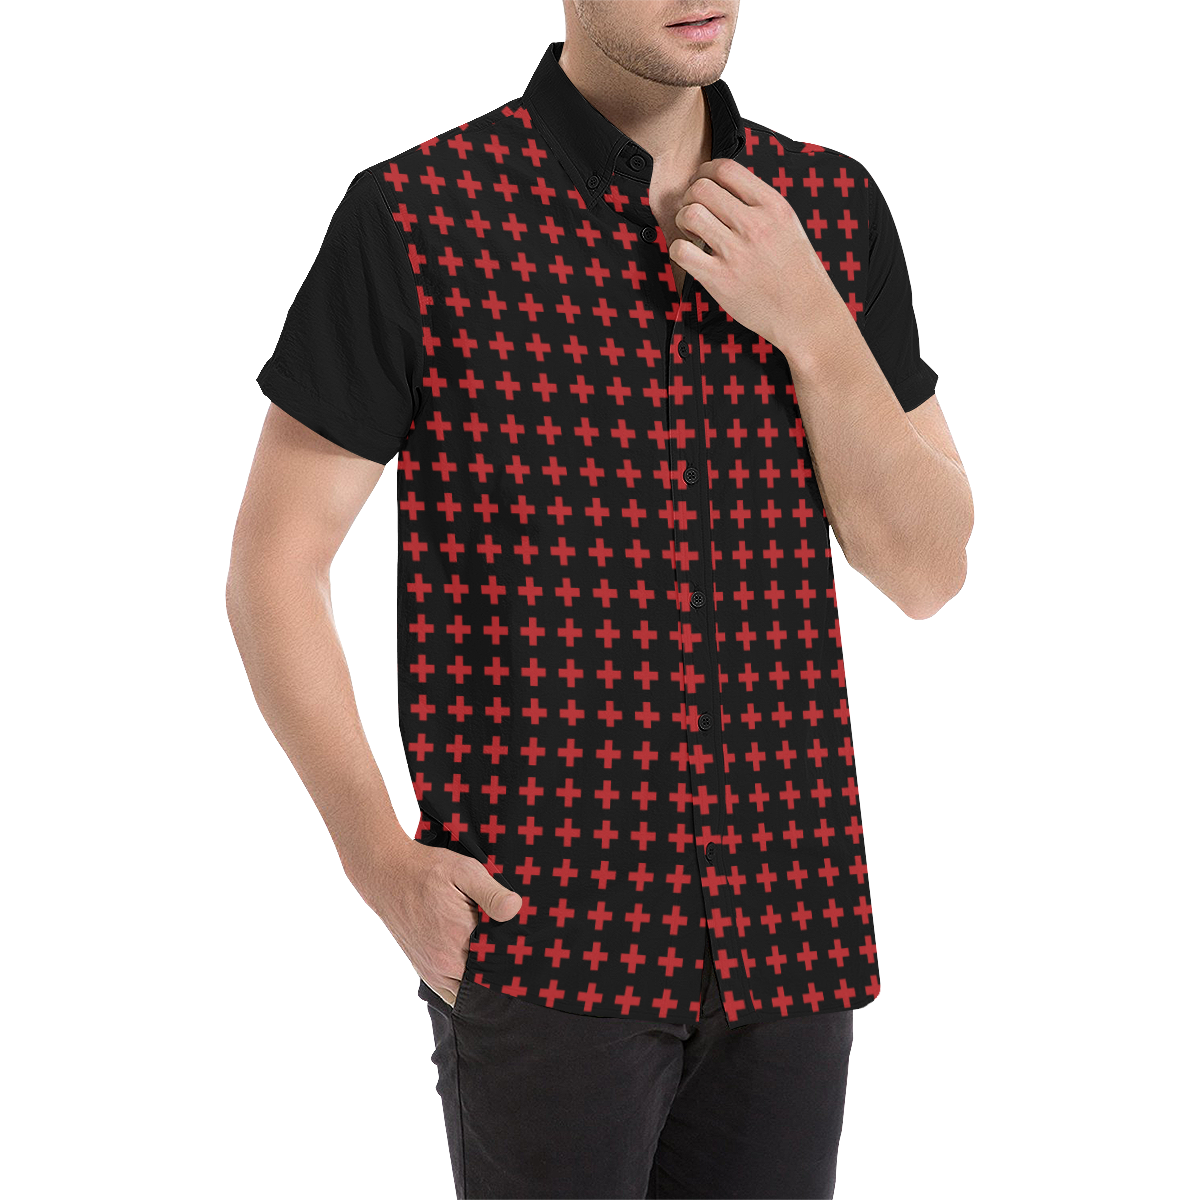 Rock Style Red Crosses Pattern Design Men's All Over Print Short Sleeve Shirt/Large Size (Model T53)